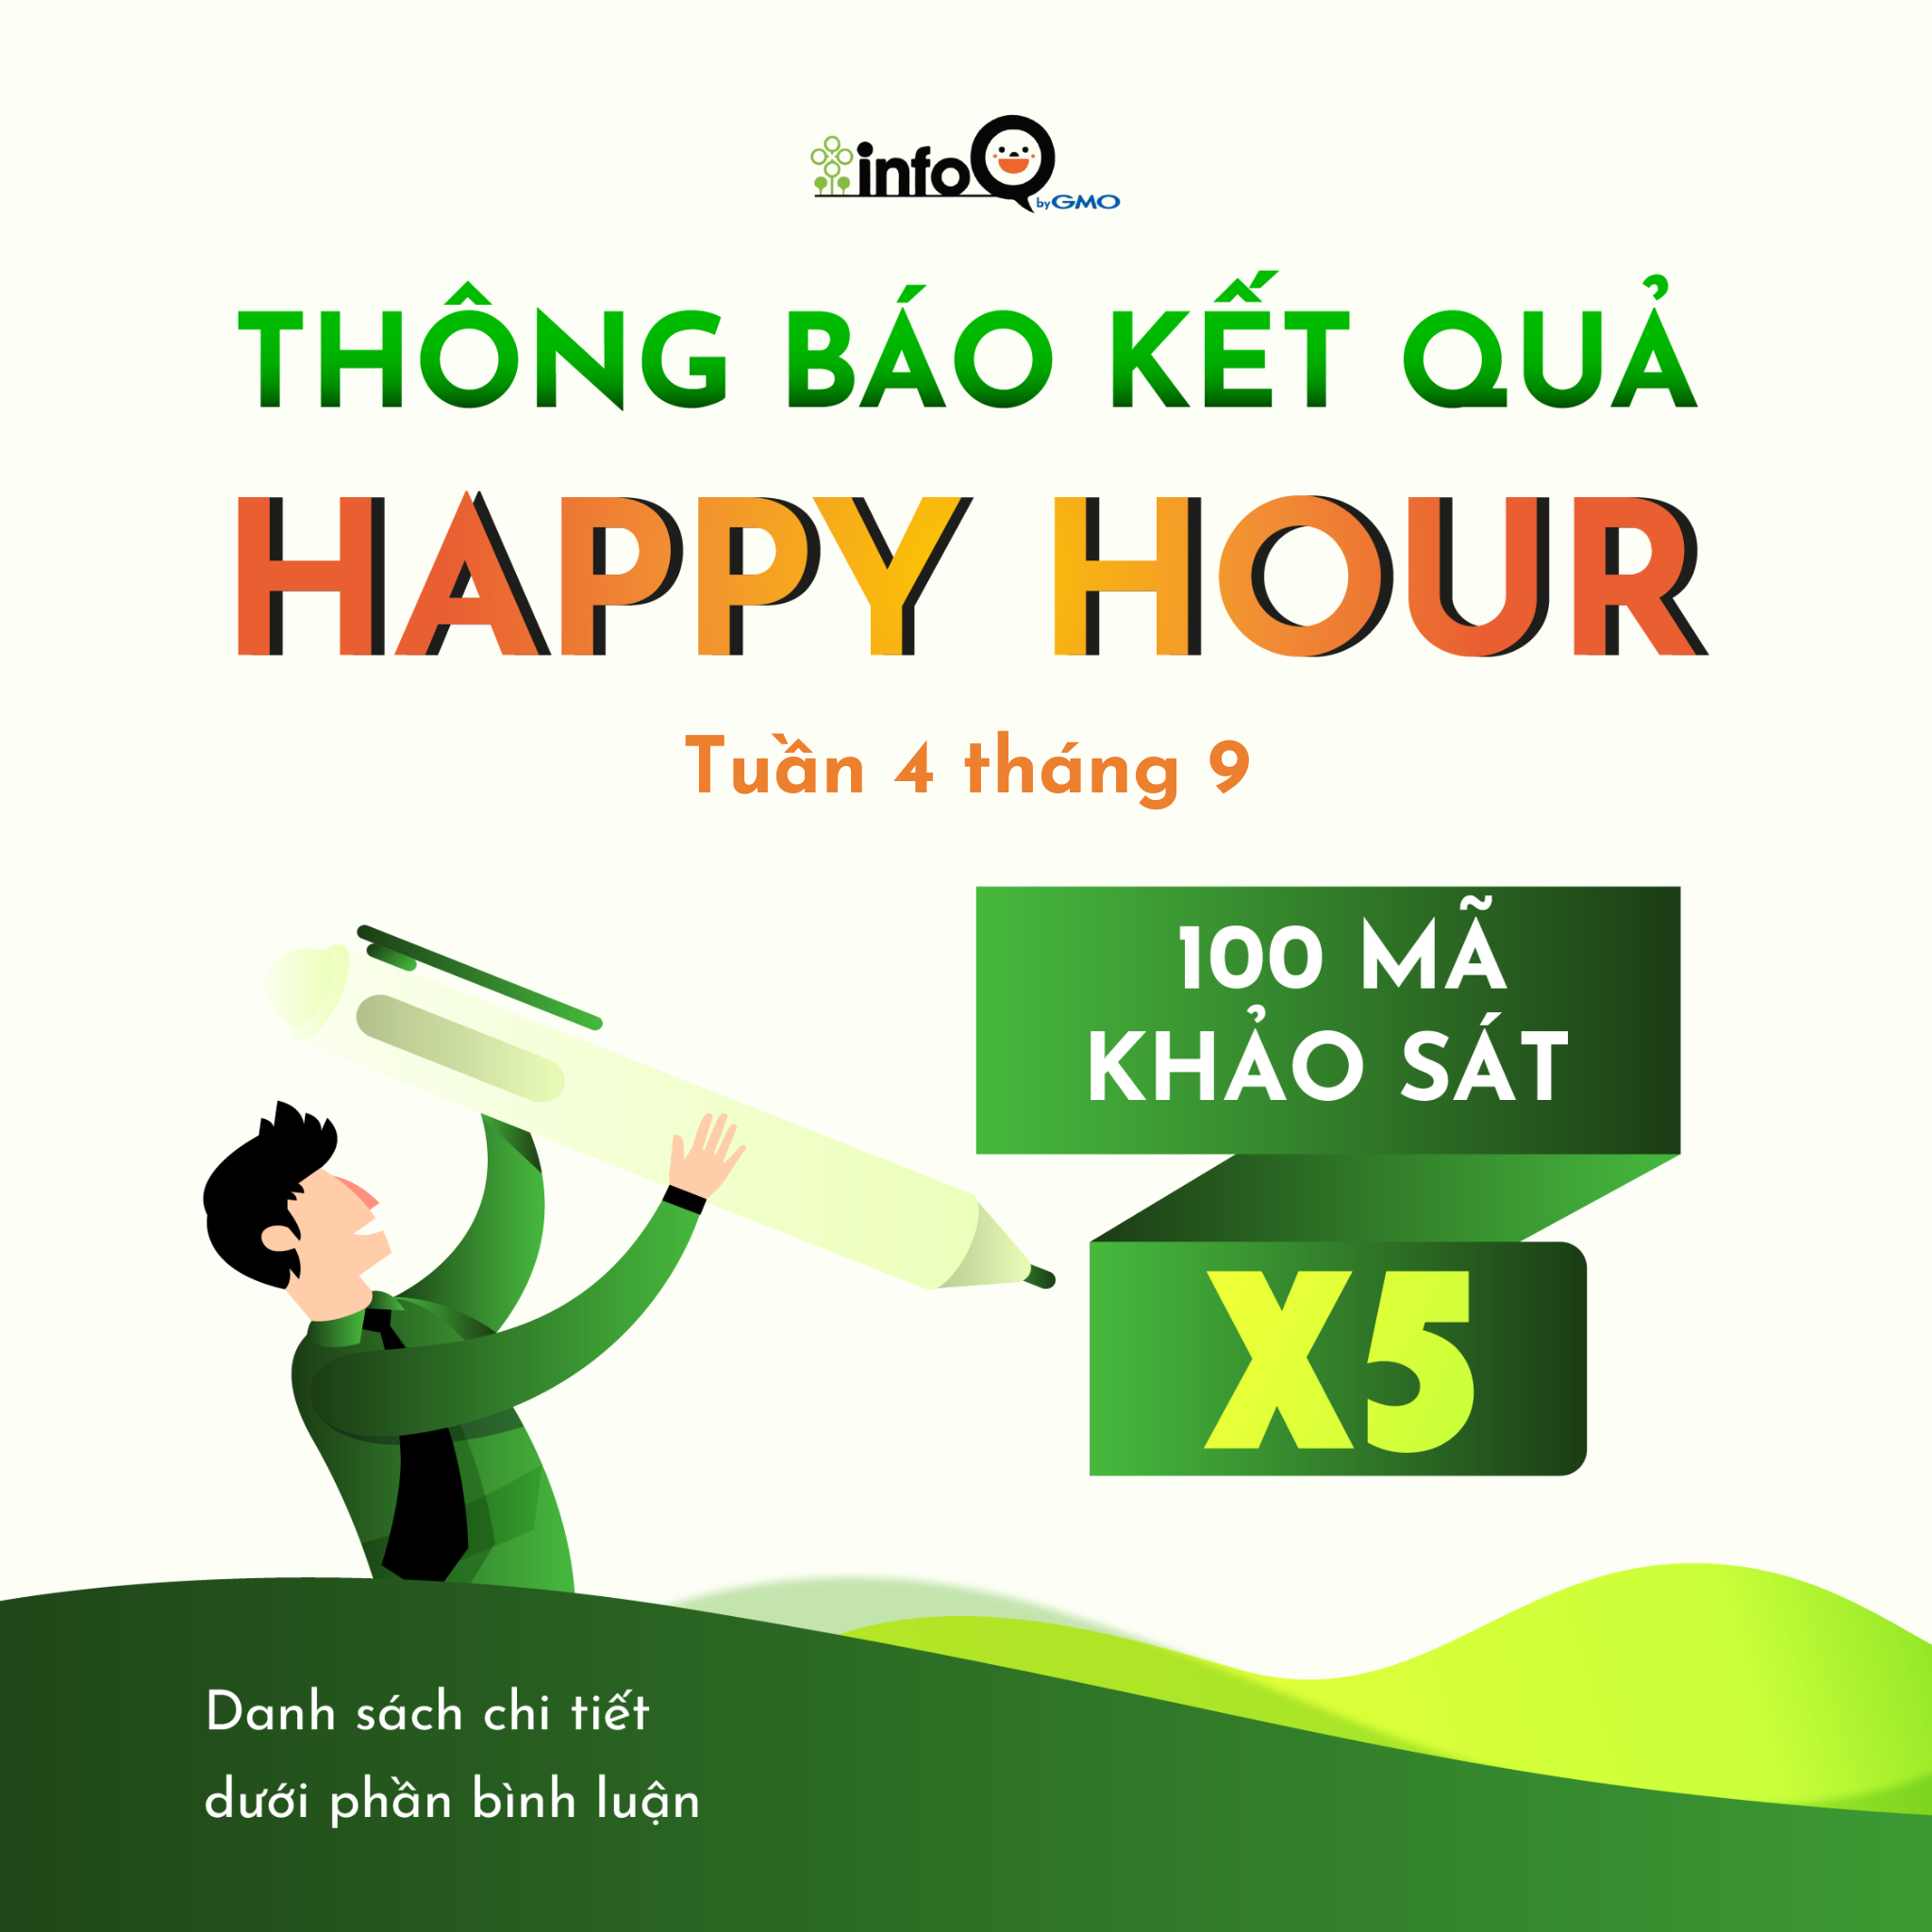 ket-qua-chuong-trinh-happy-hour-tuan-4-thang-9-1